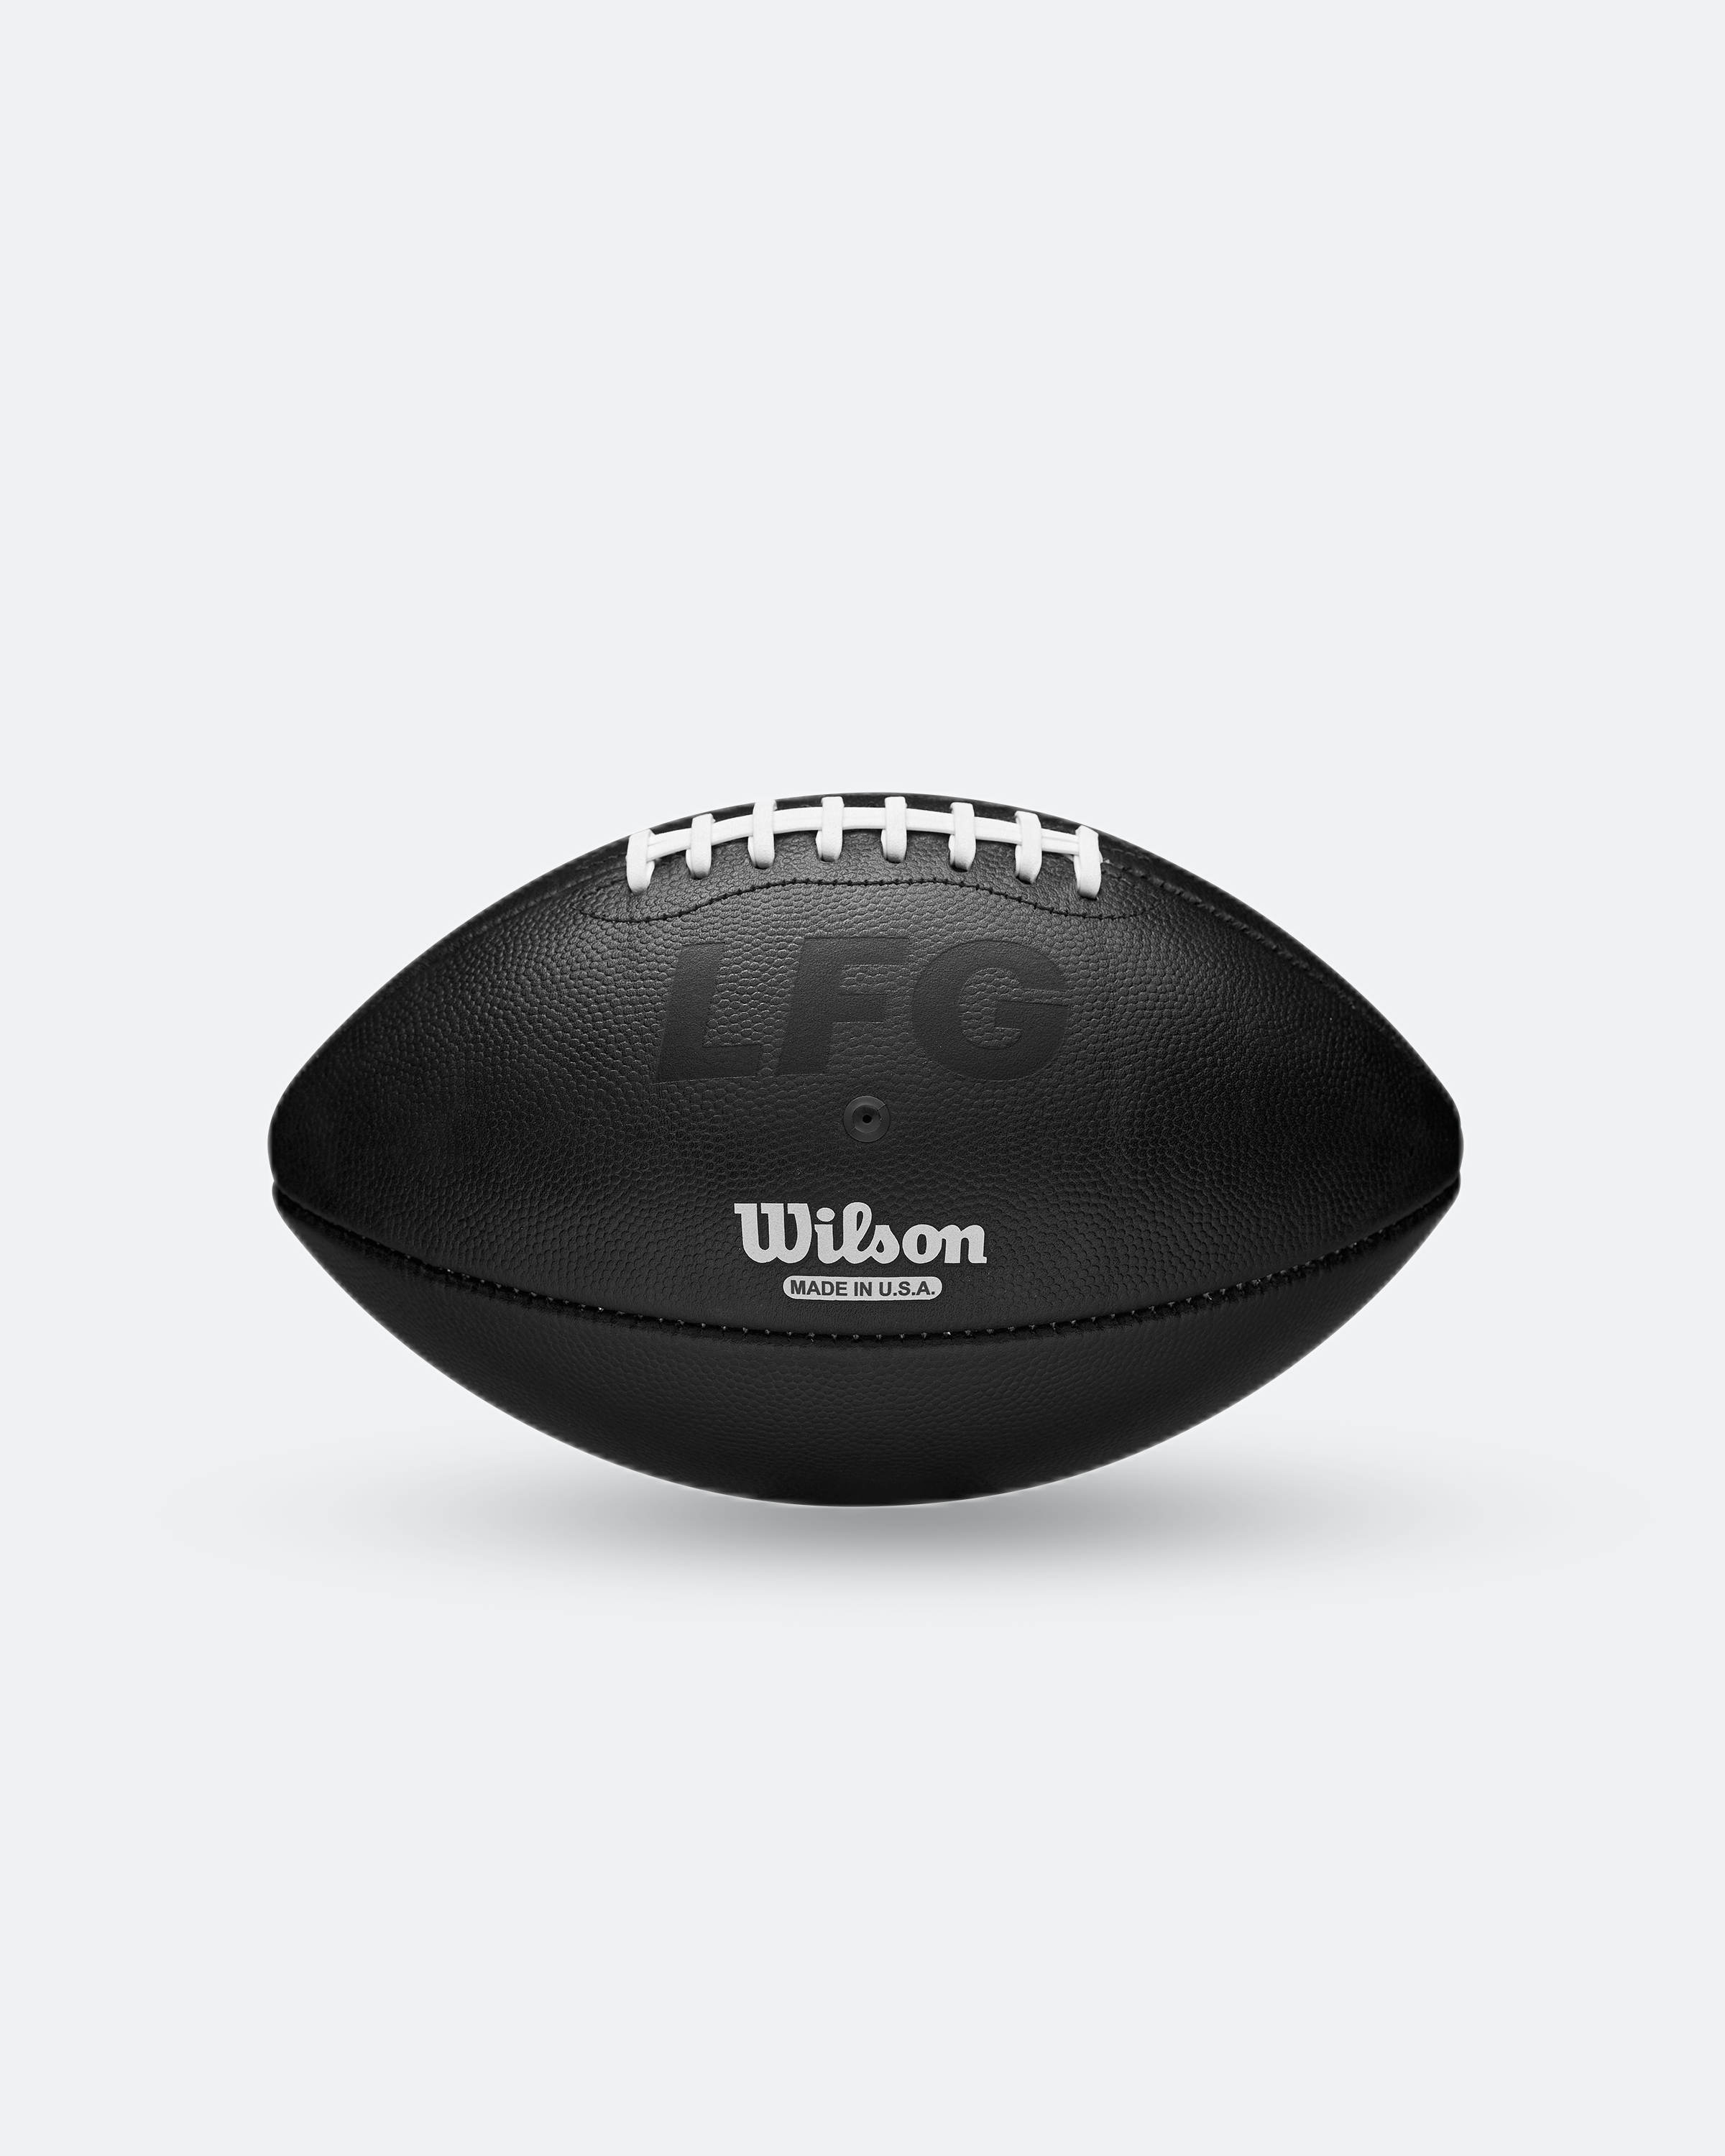 TB12 x Wilson "LFG" Limited Edition Football